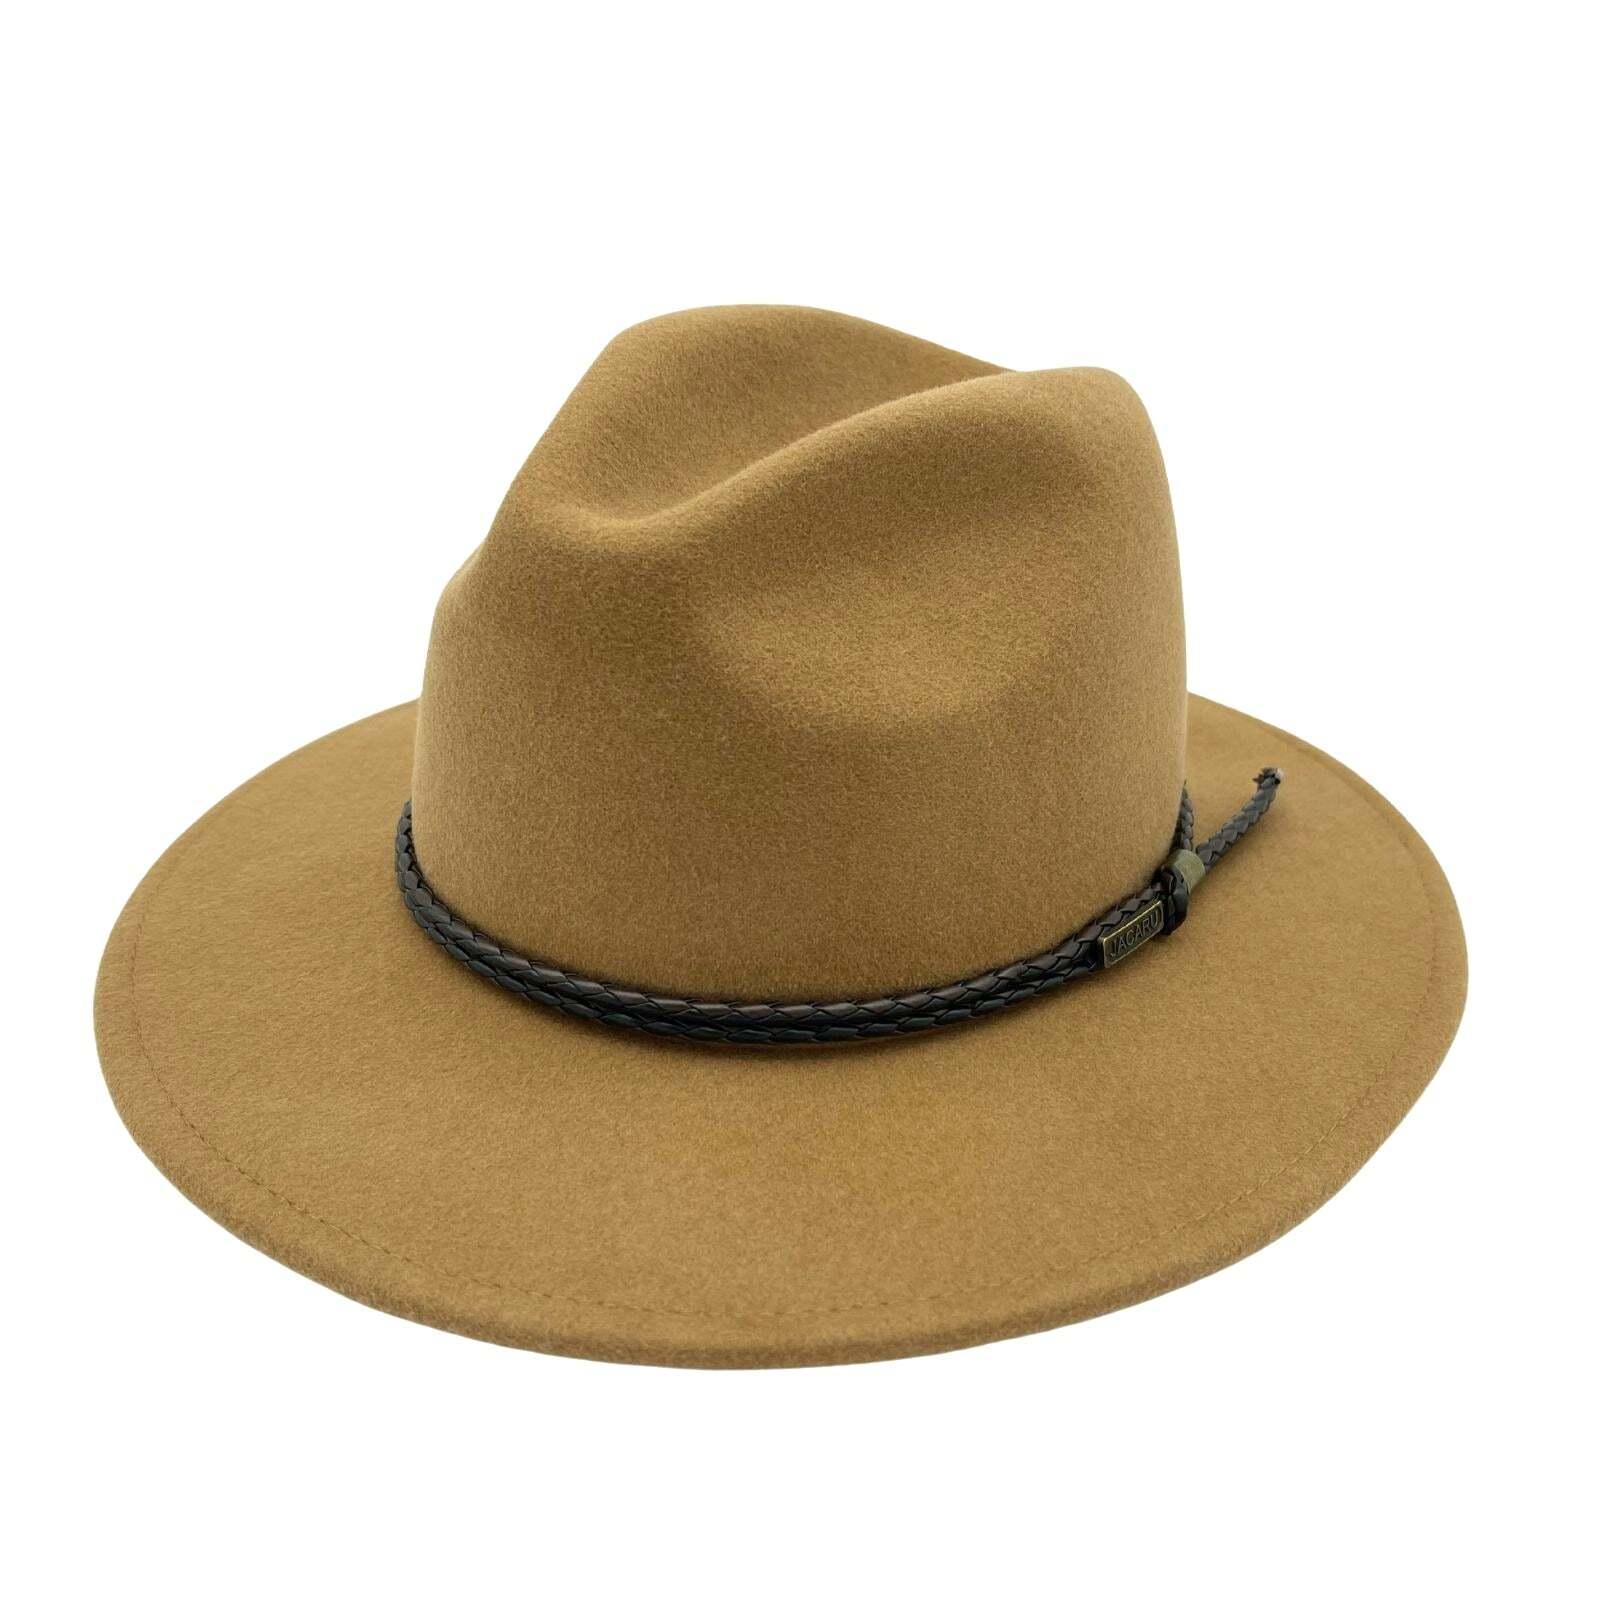 Jacaru Australian Wool Fedora Hat Outback 100% Wool Crushable Travel - Caramel - XL